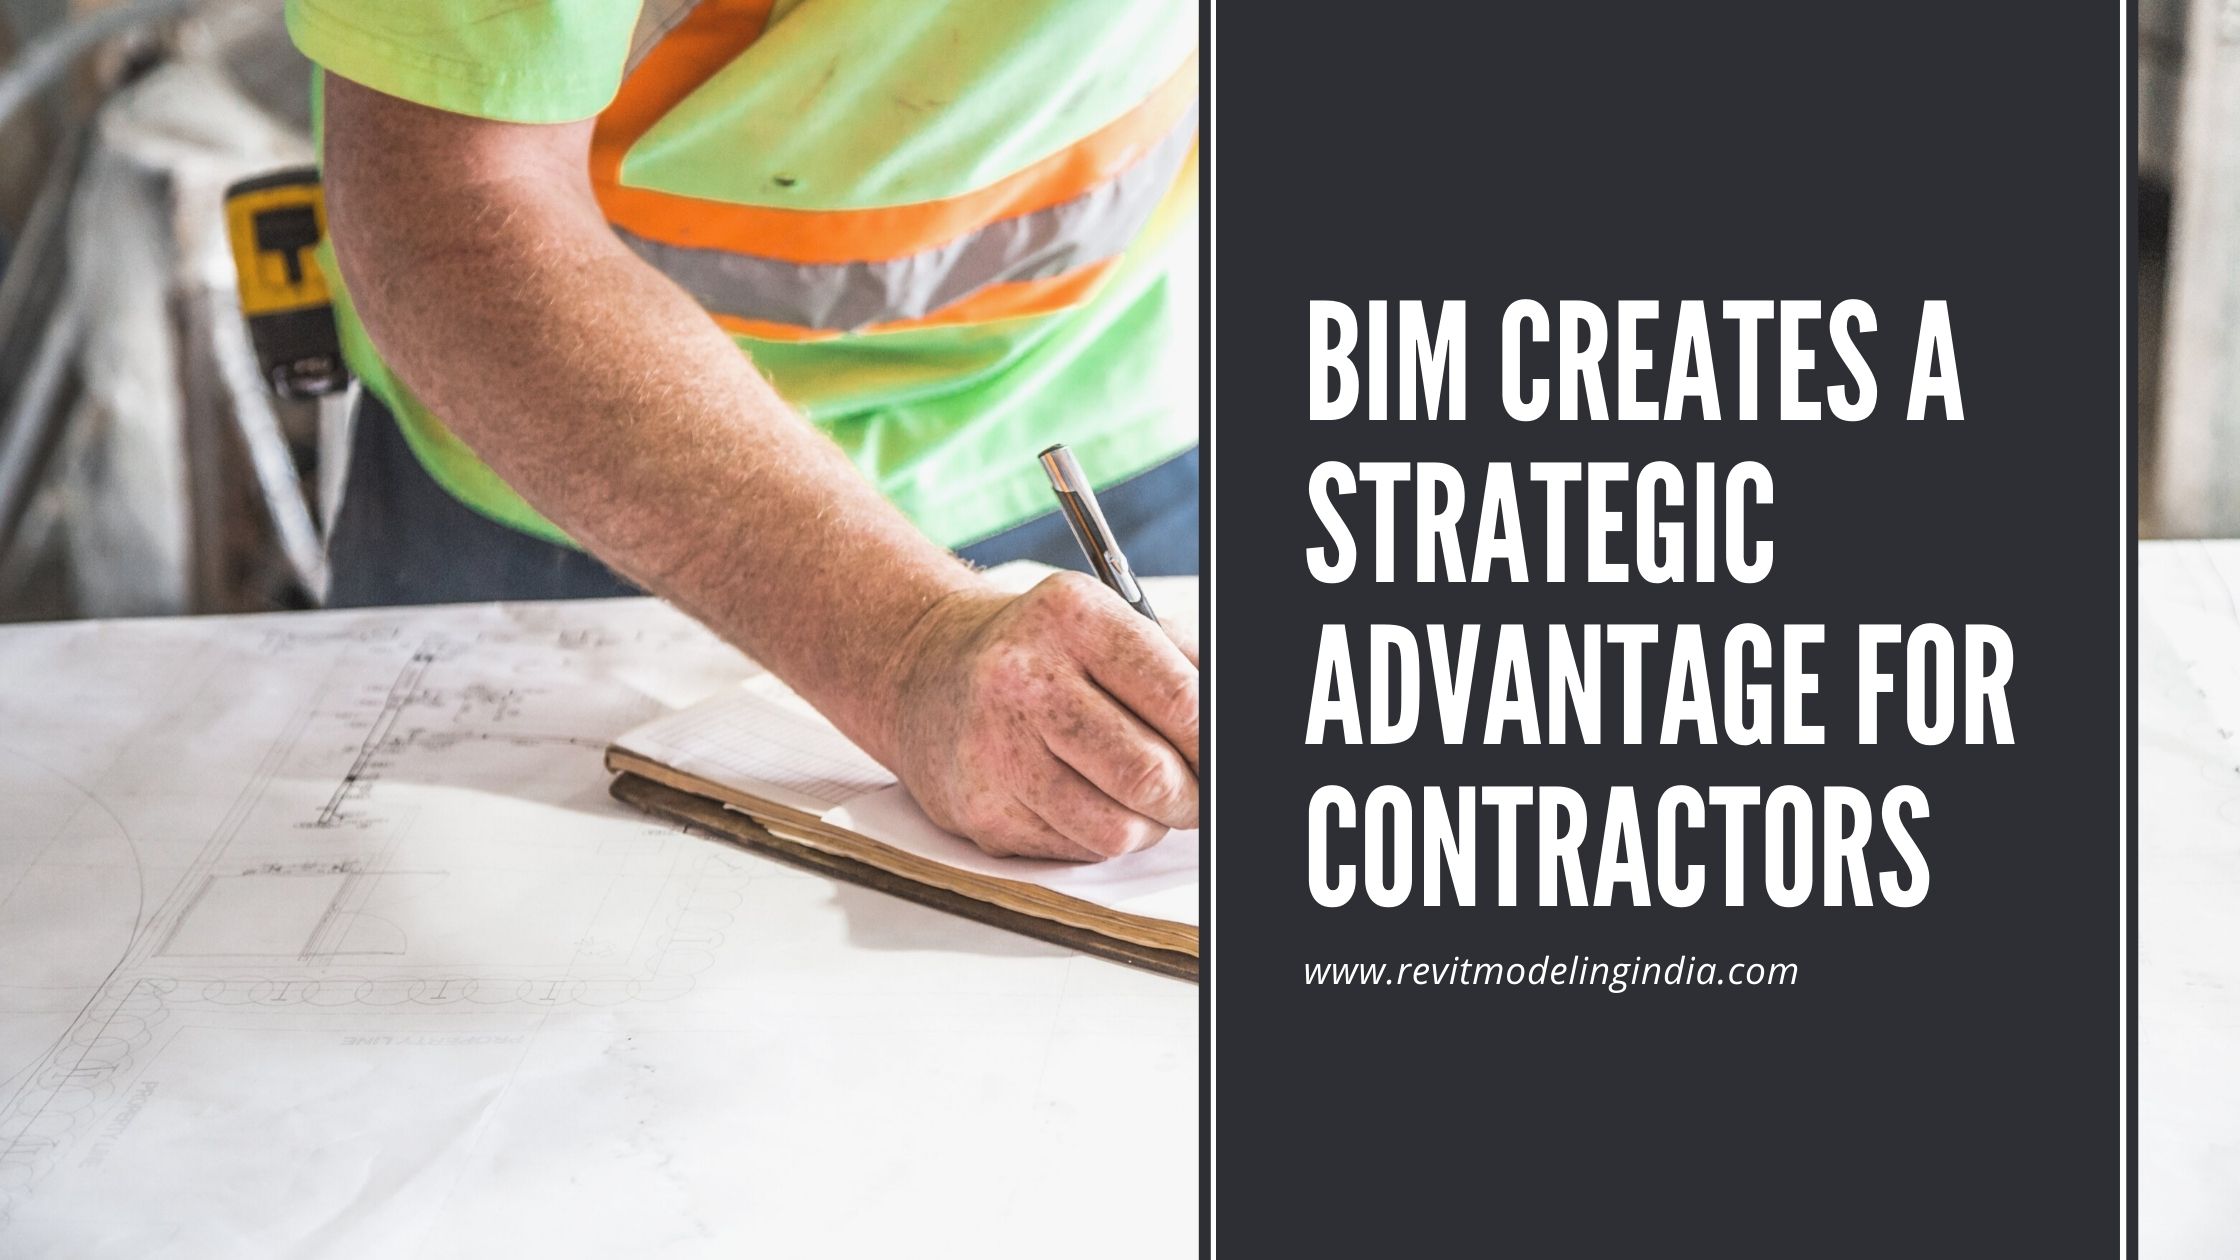 BIM Creates A Strategic Advantage for Contractors